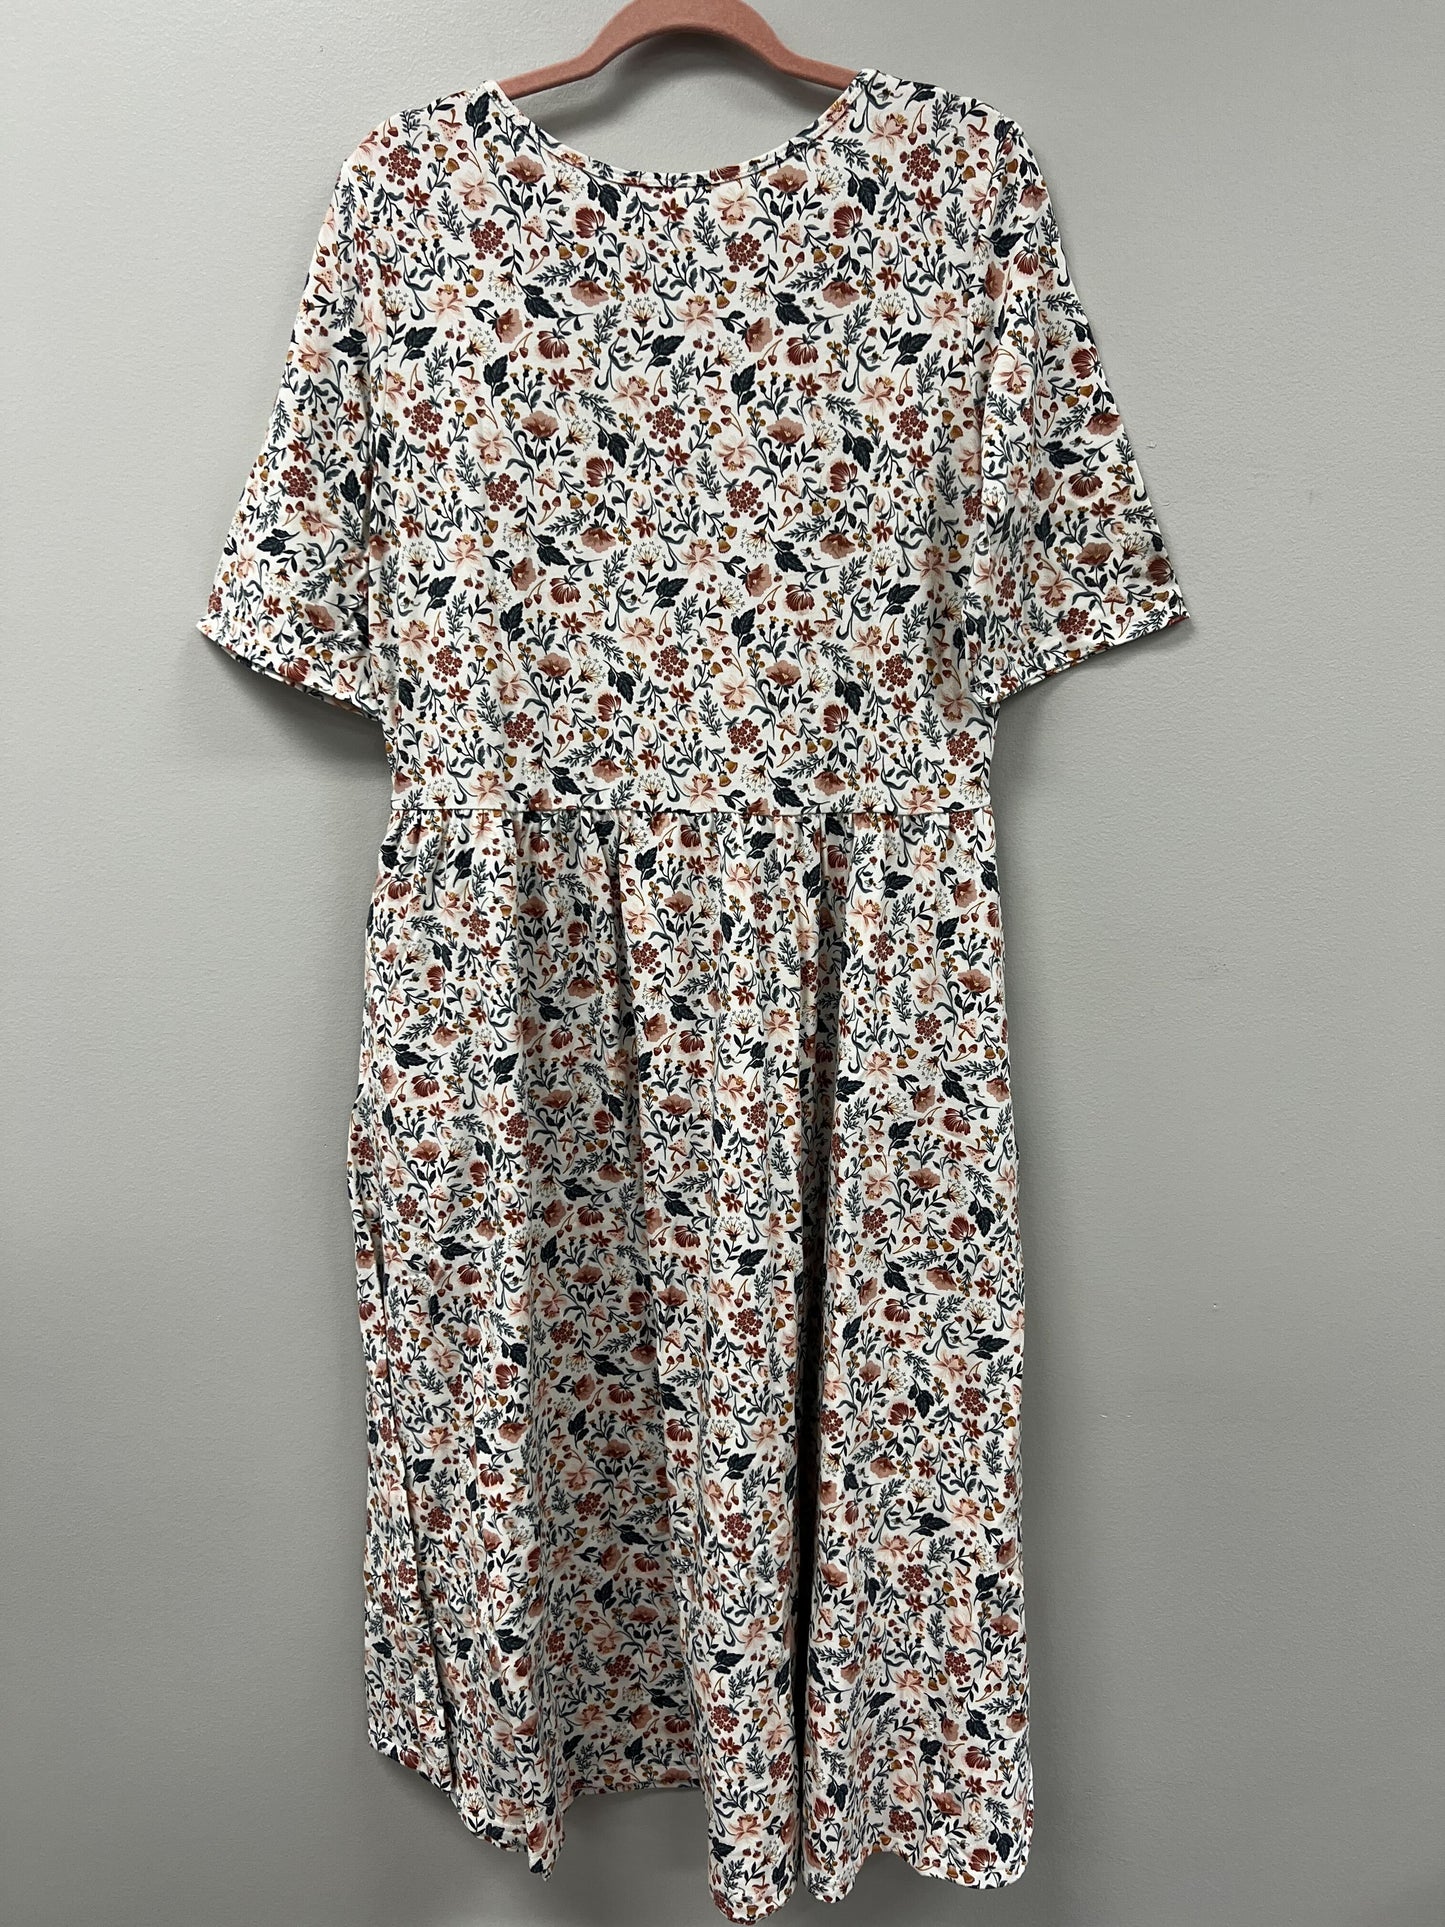 Outlet 5698 - Latched Mama Classic Cotton Nursing Dress - Wonderland Floral - Extra Large